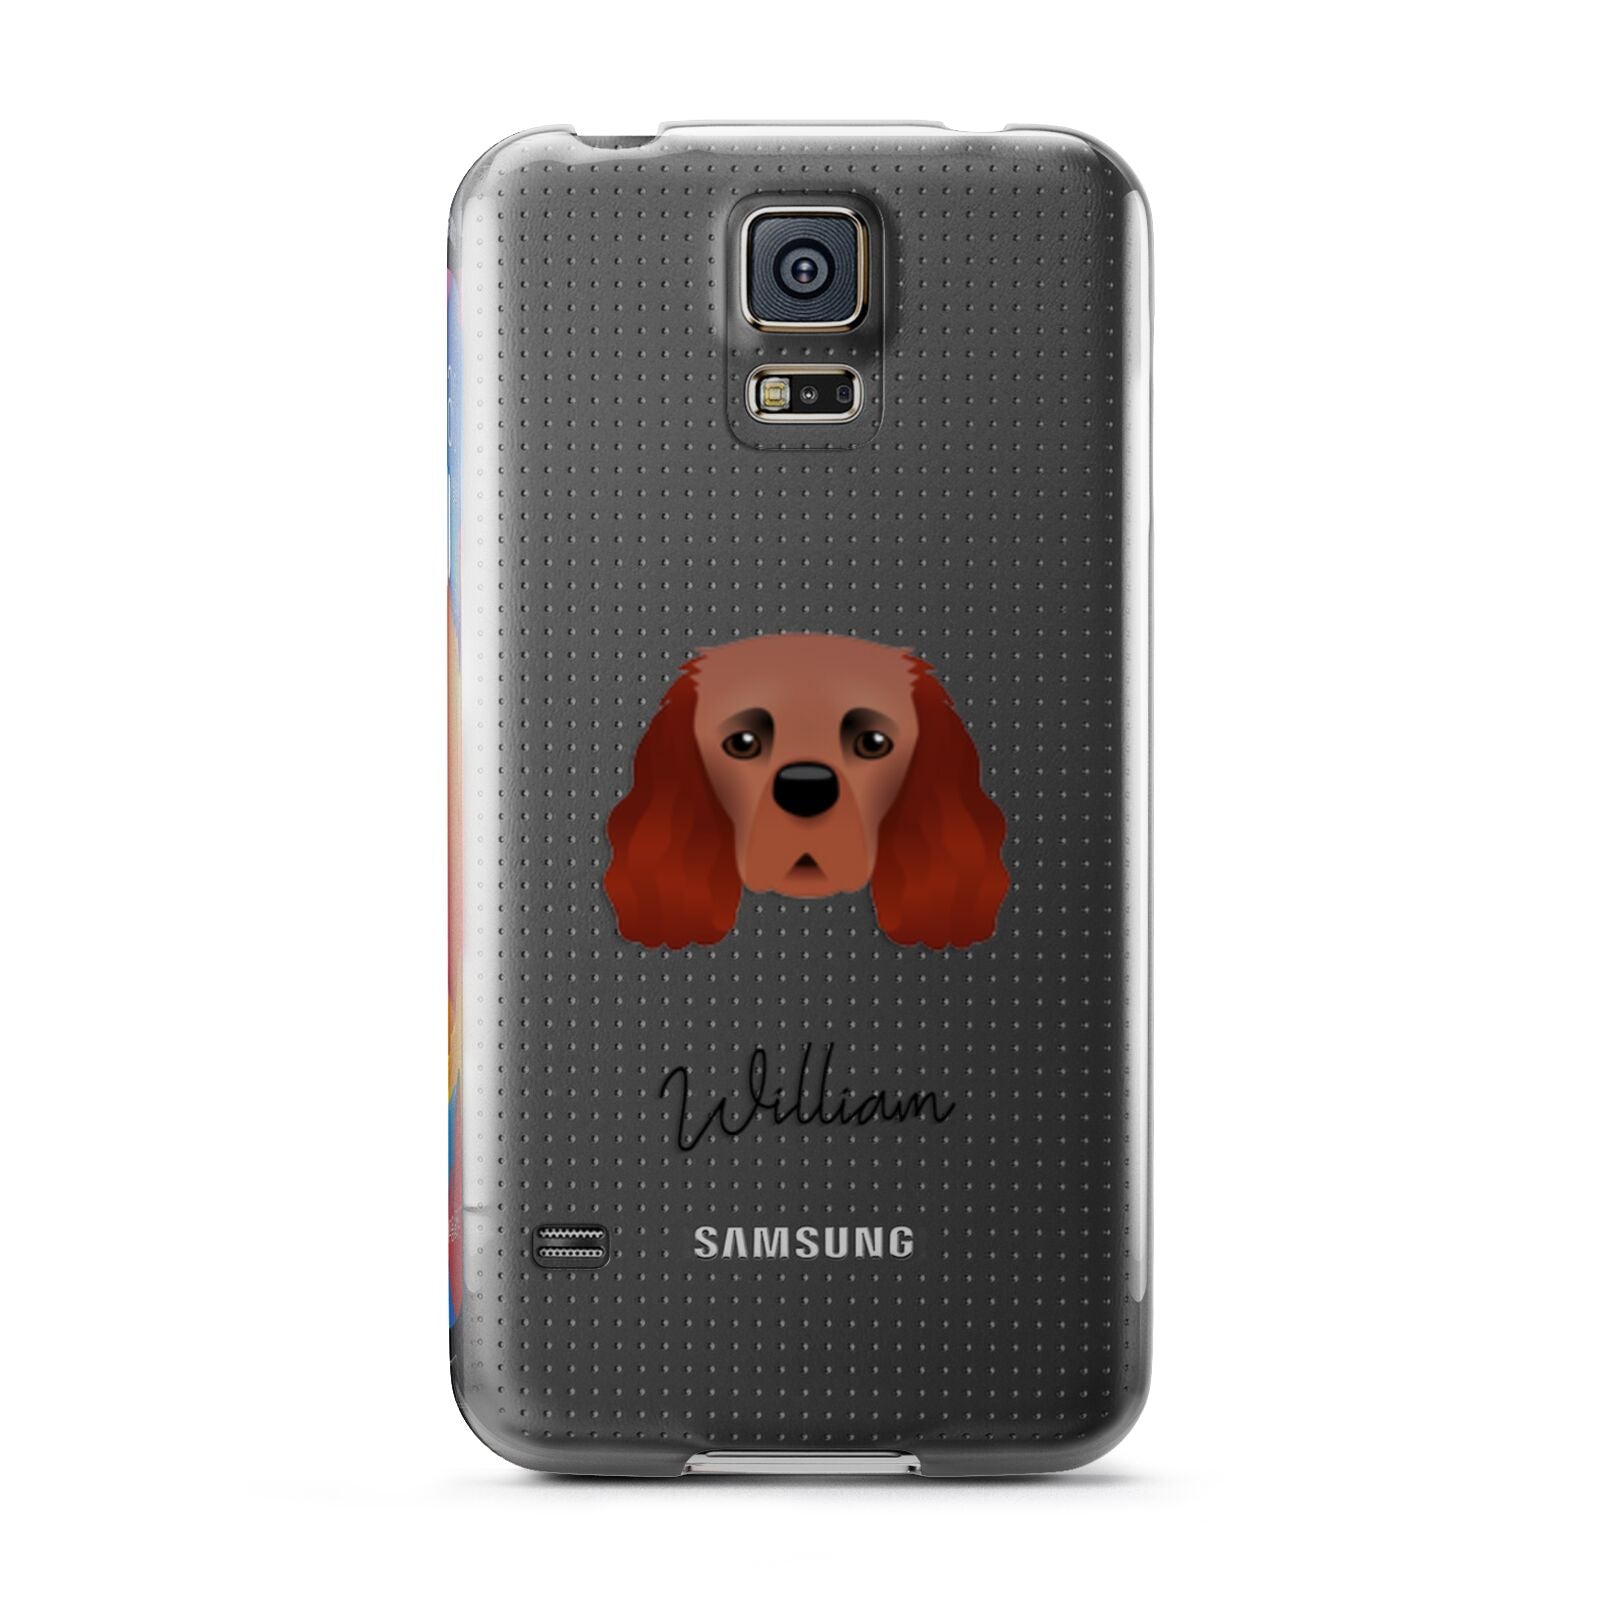 Cavalier King Charles Spaniel Personalised Samsung Galaxy S5 Case